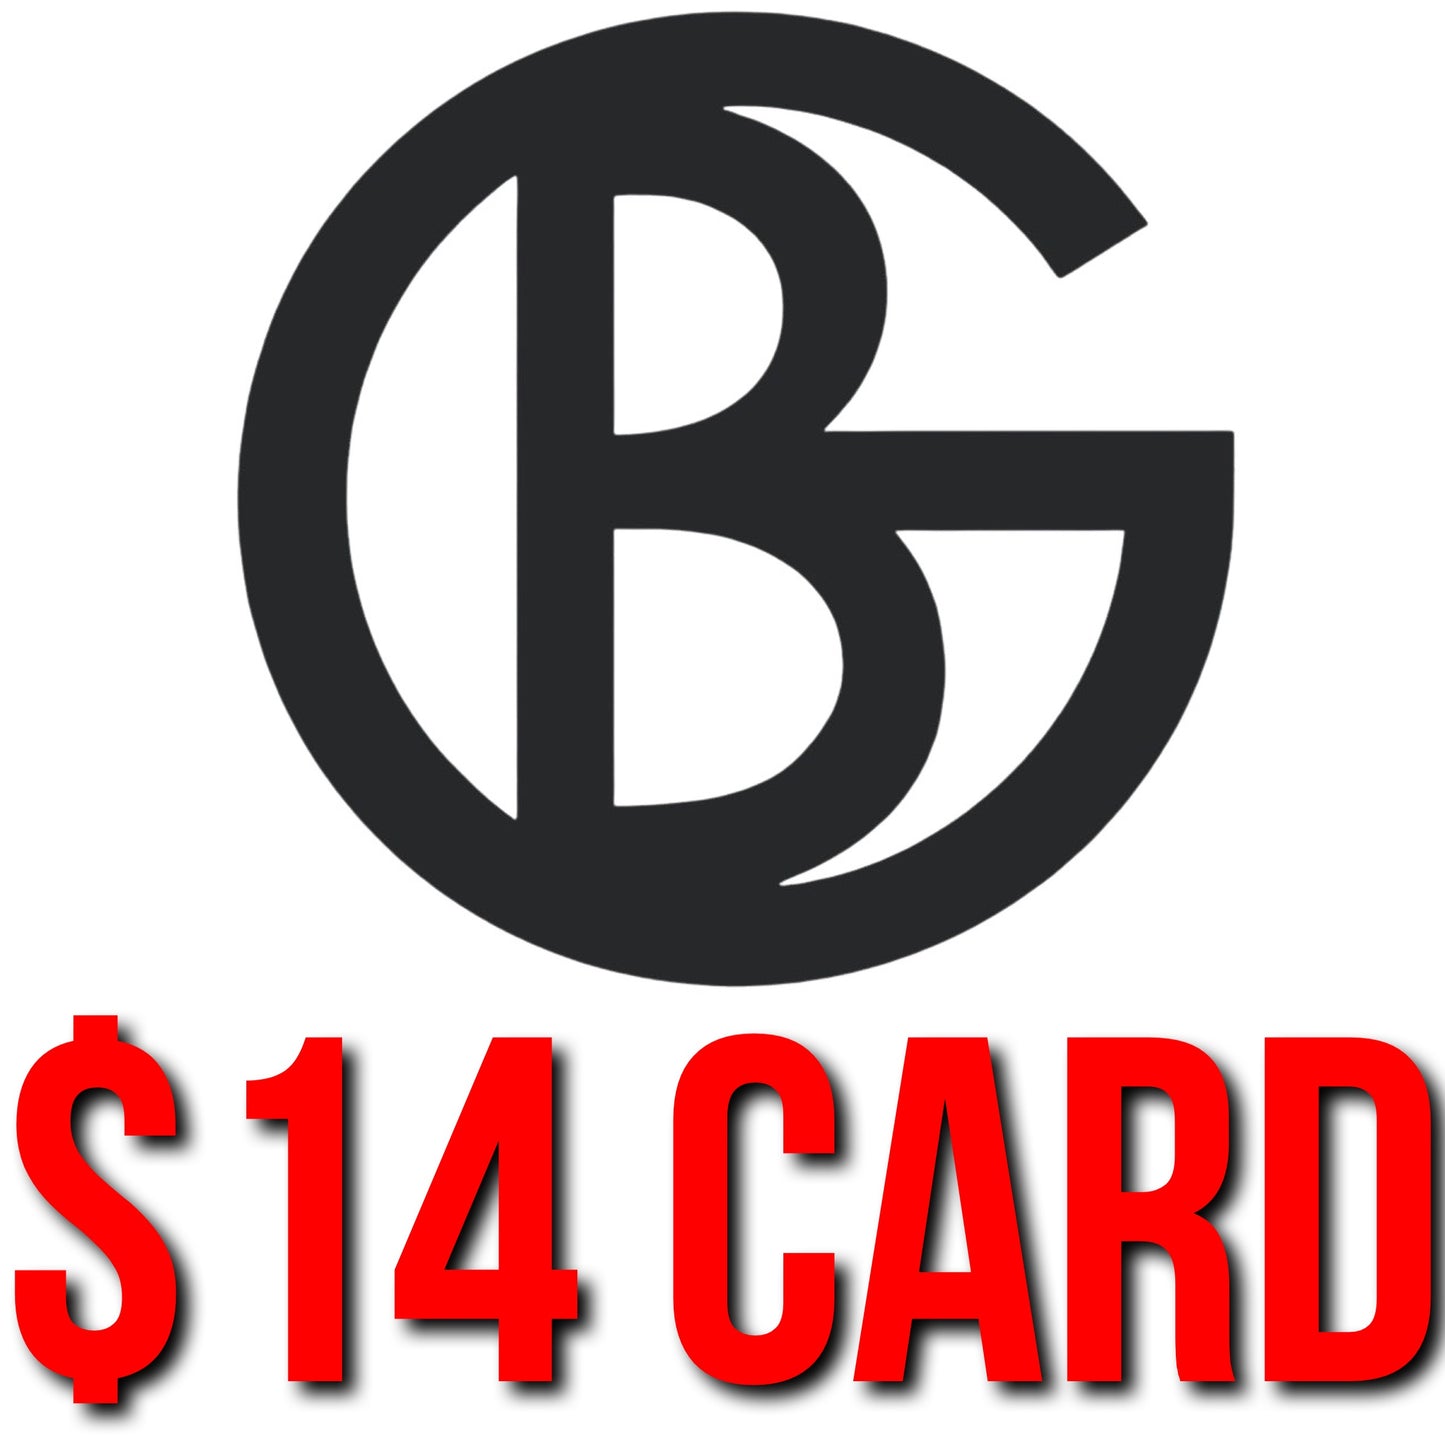 BG $14 Card Single